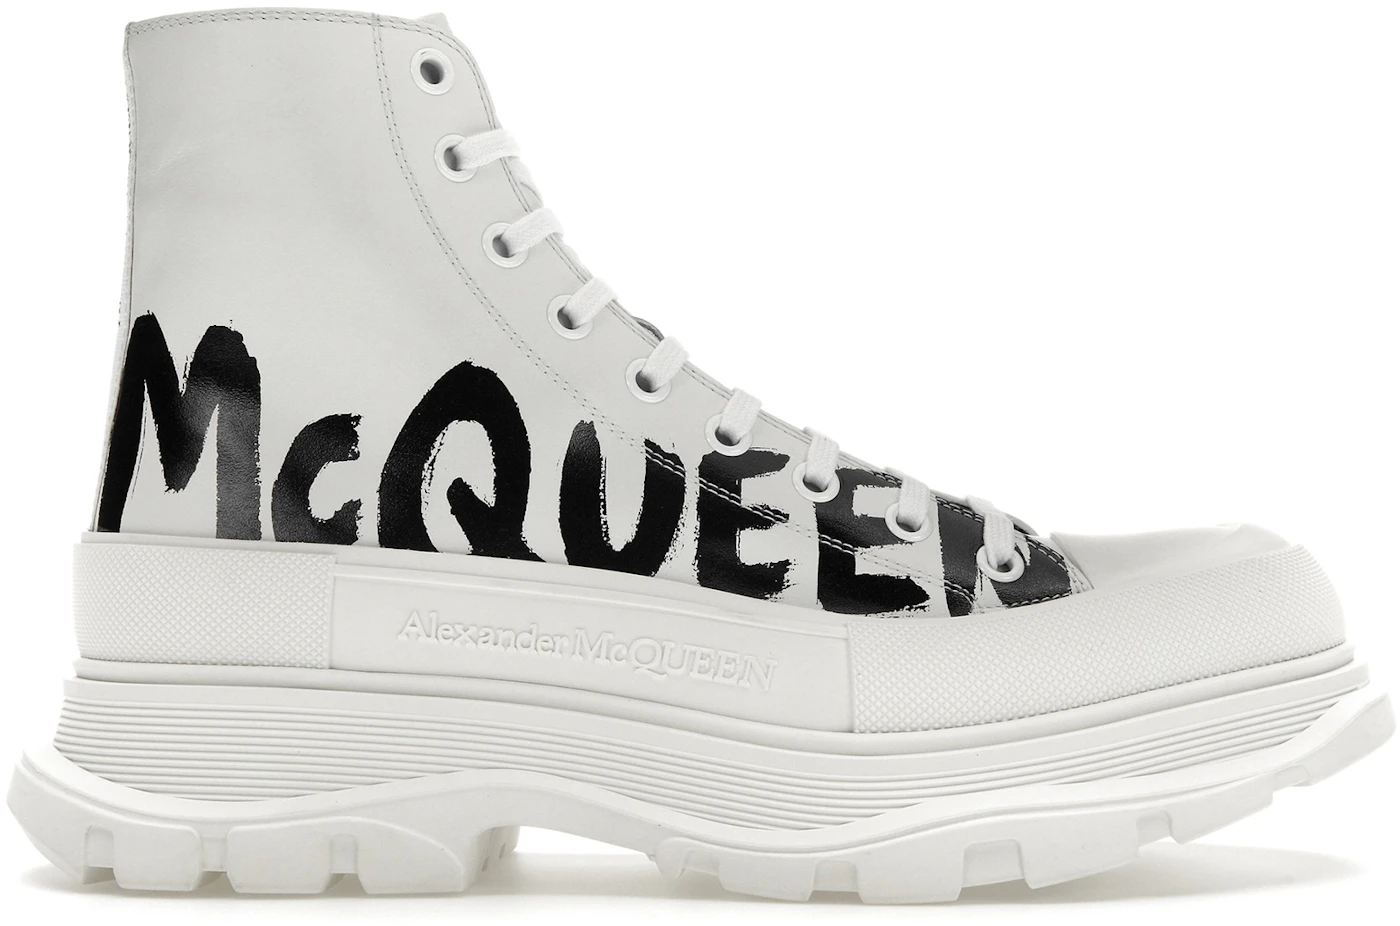 Alexander McQueen Tread Slick Boot Graffiti Optic White Men's ...